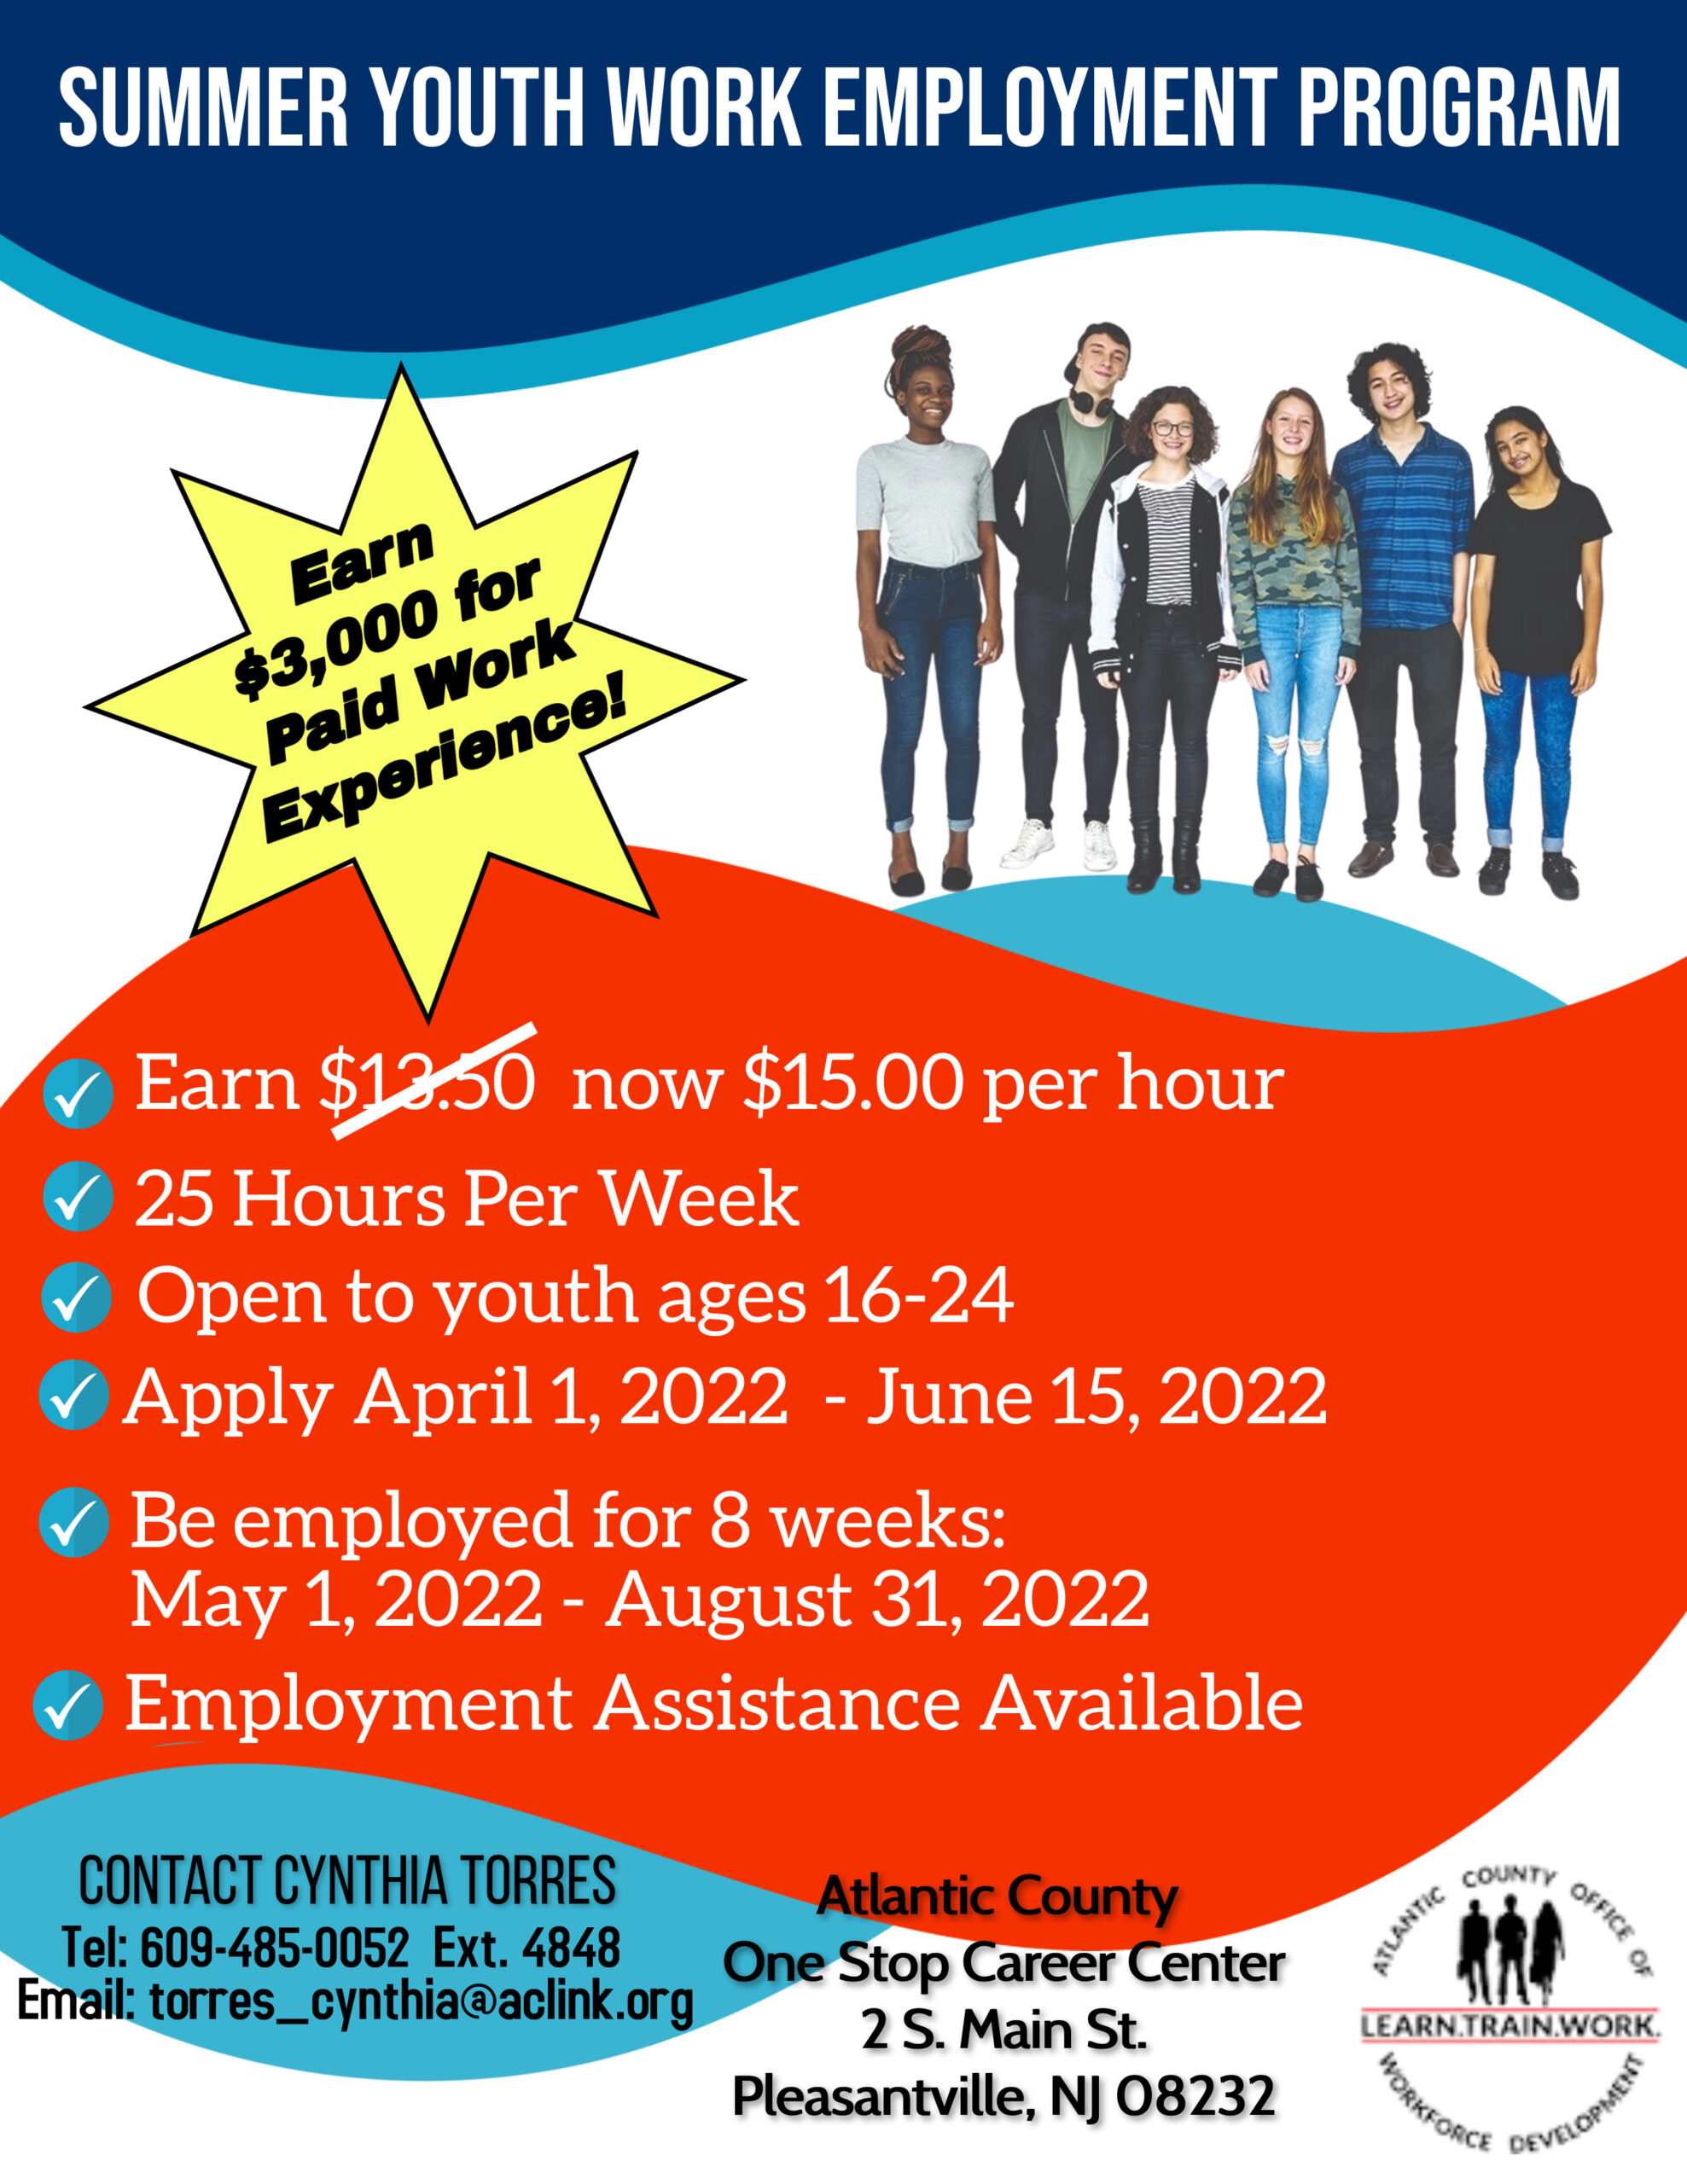 Summer Youth Work Employment Program City of Port Republic